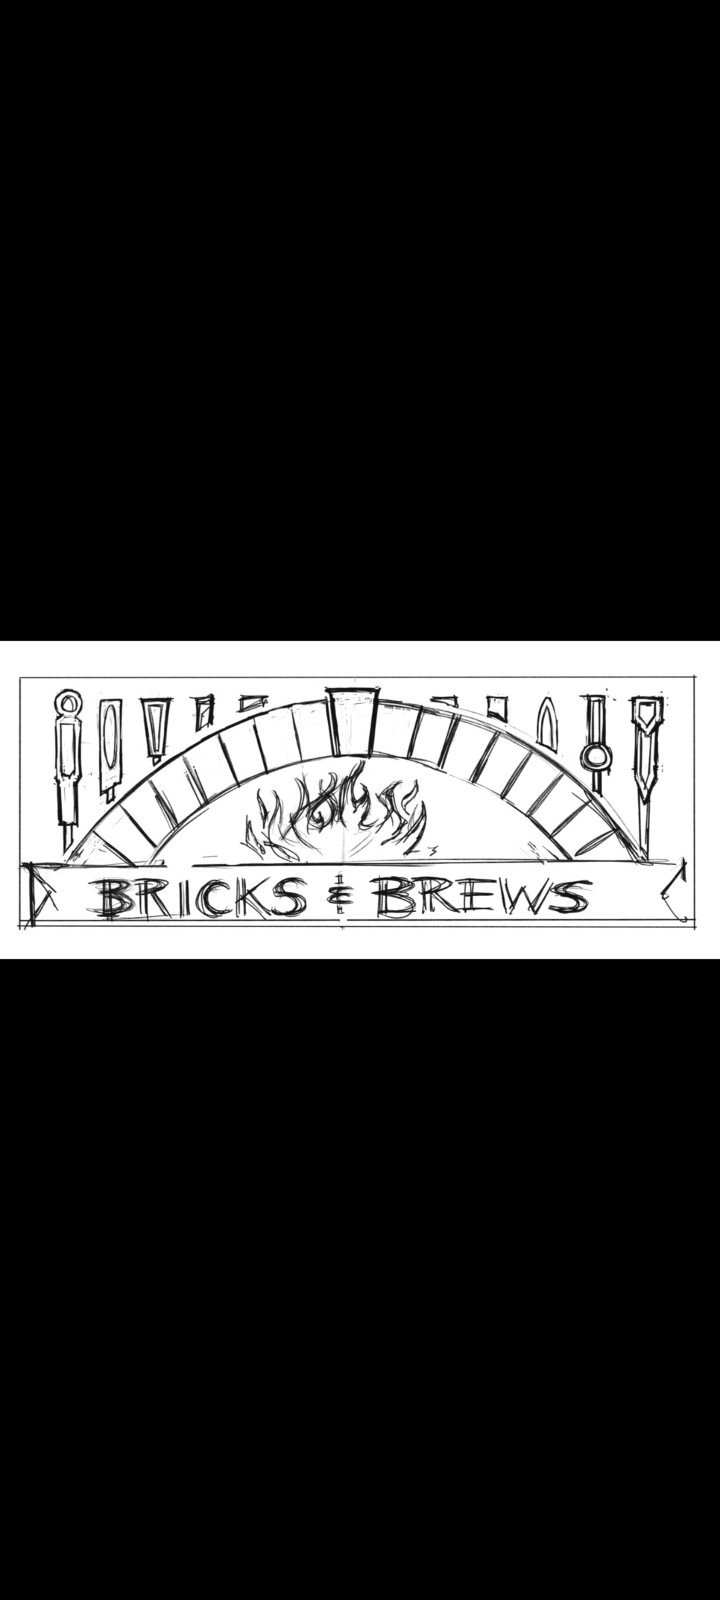 Bricks and Brews 731